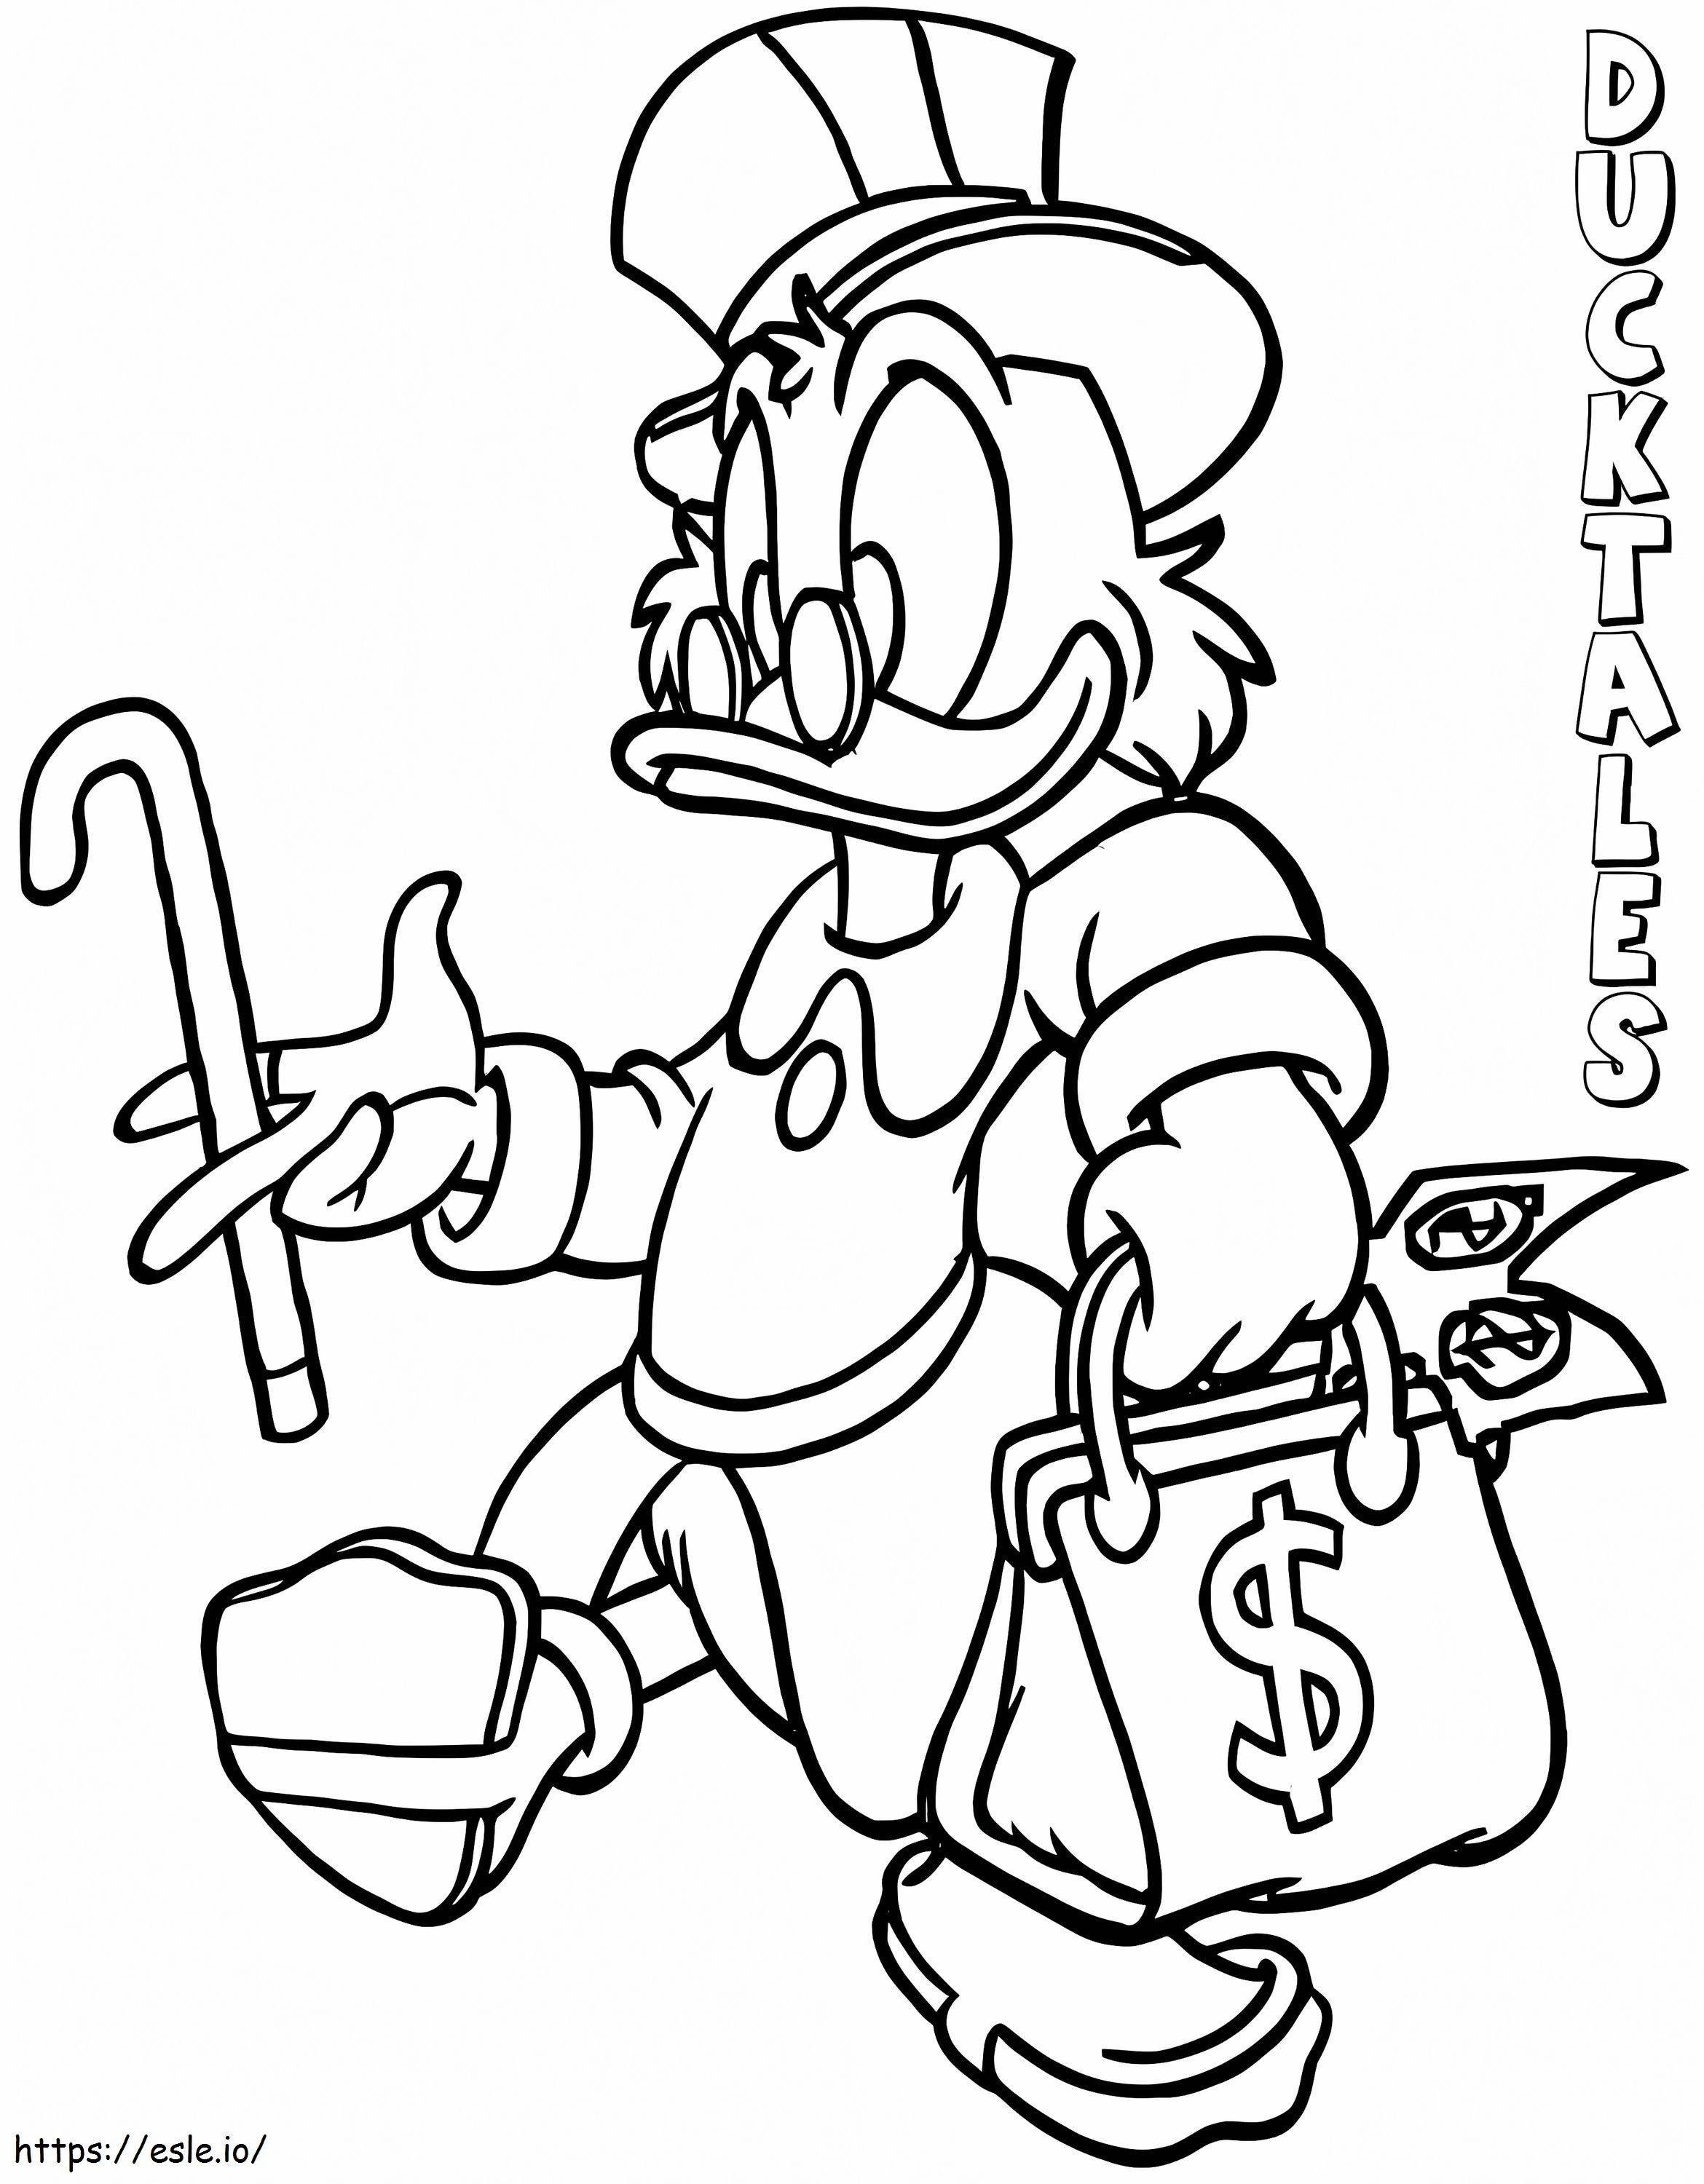 Scrooge McDuck In Ducktales coloring page